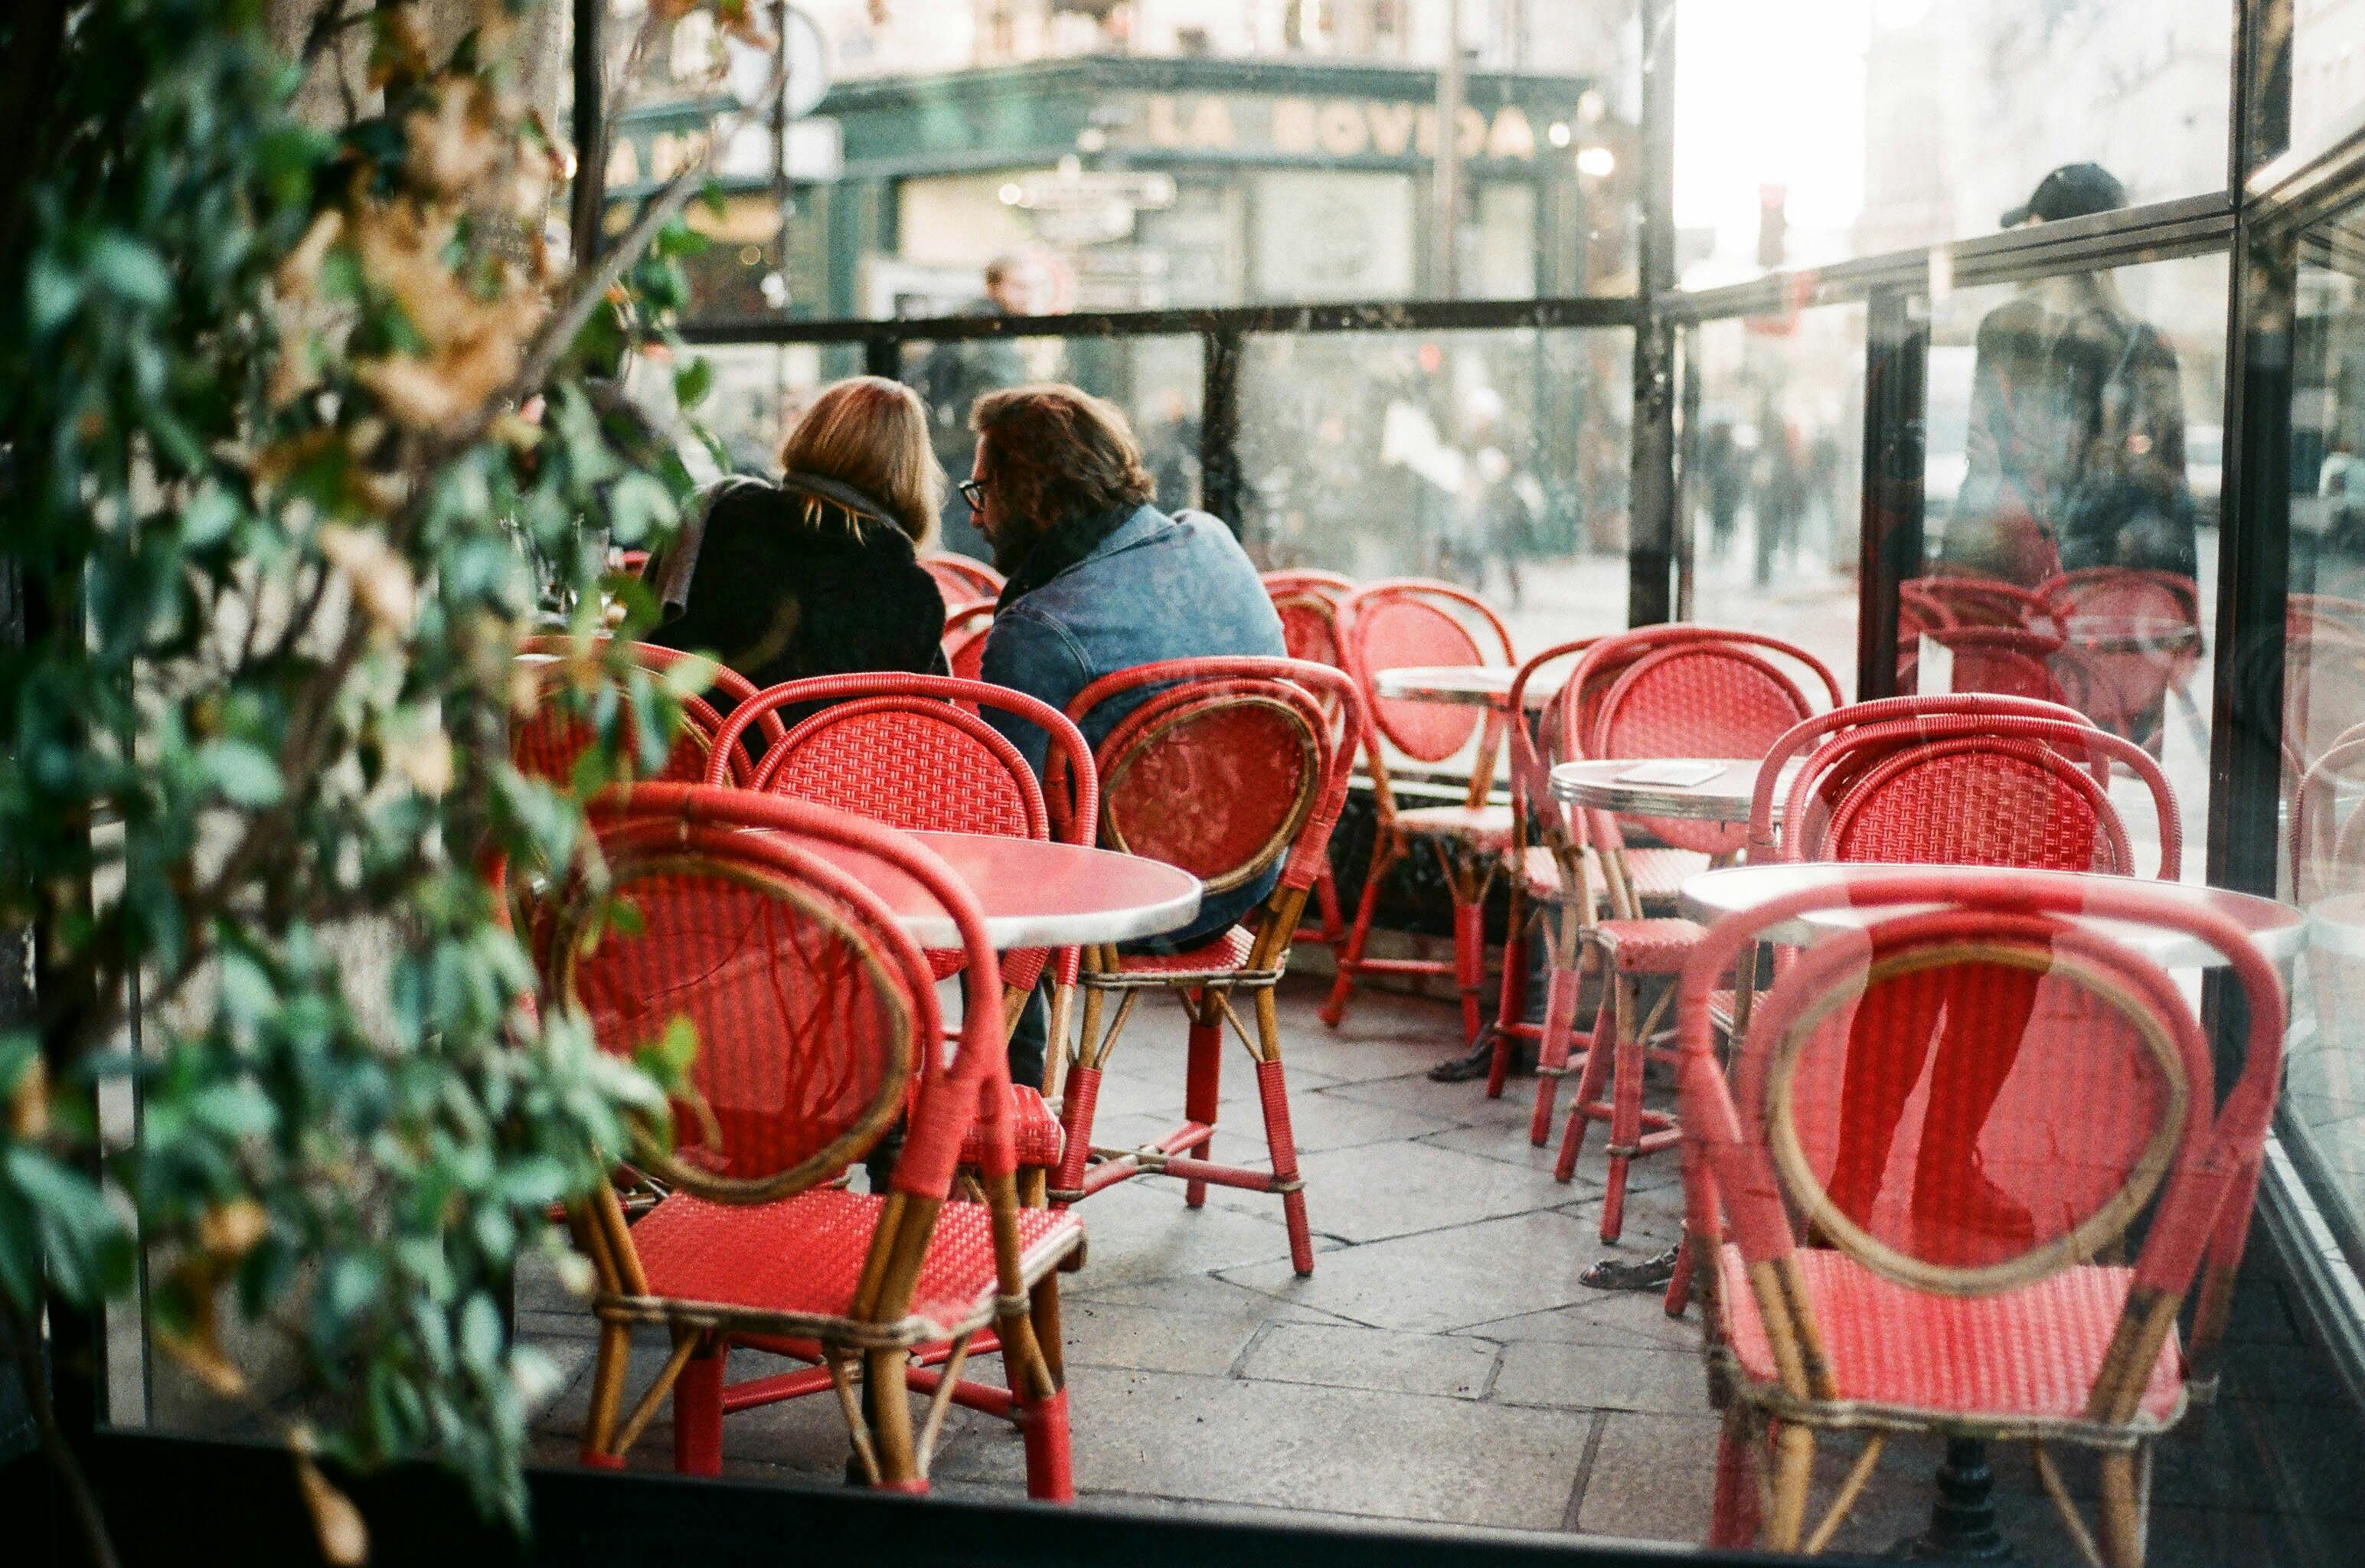 A couple at a restaurant | Source: Pexels